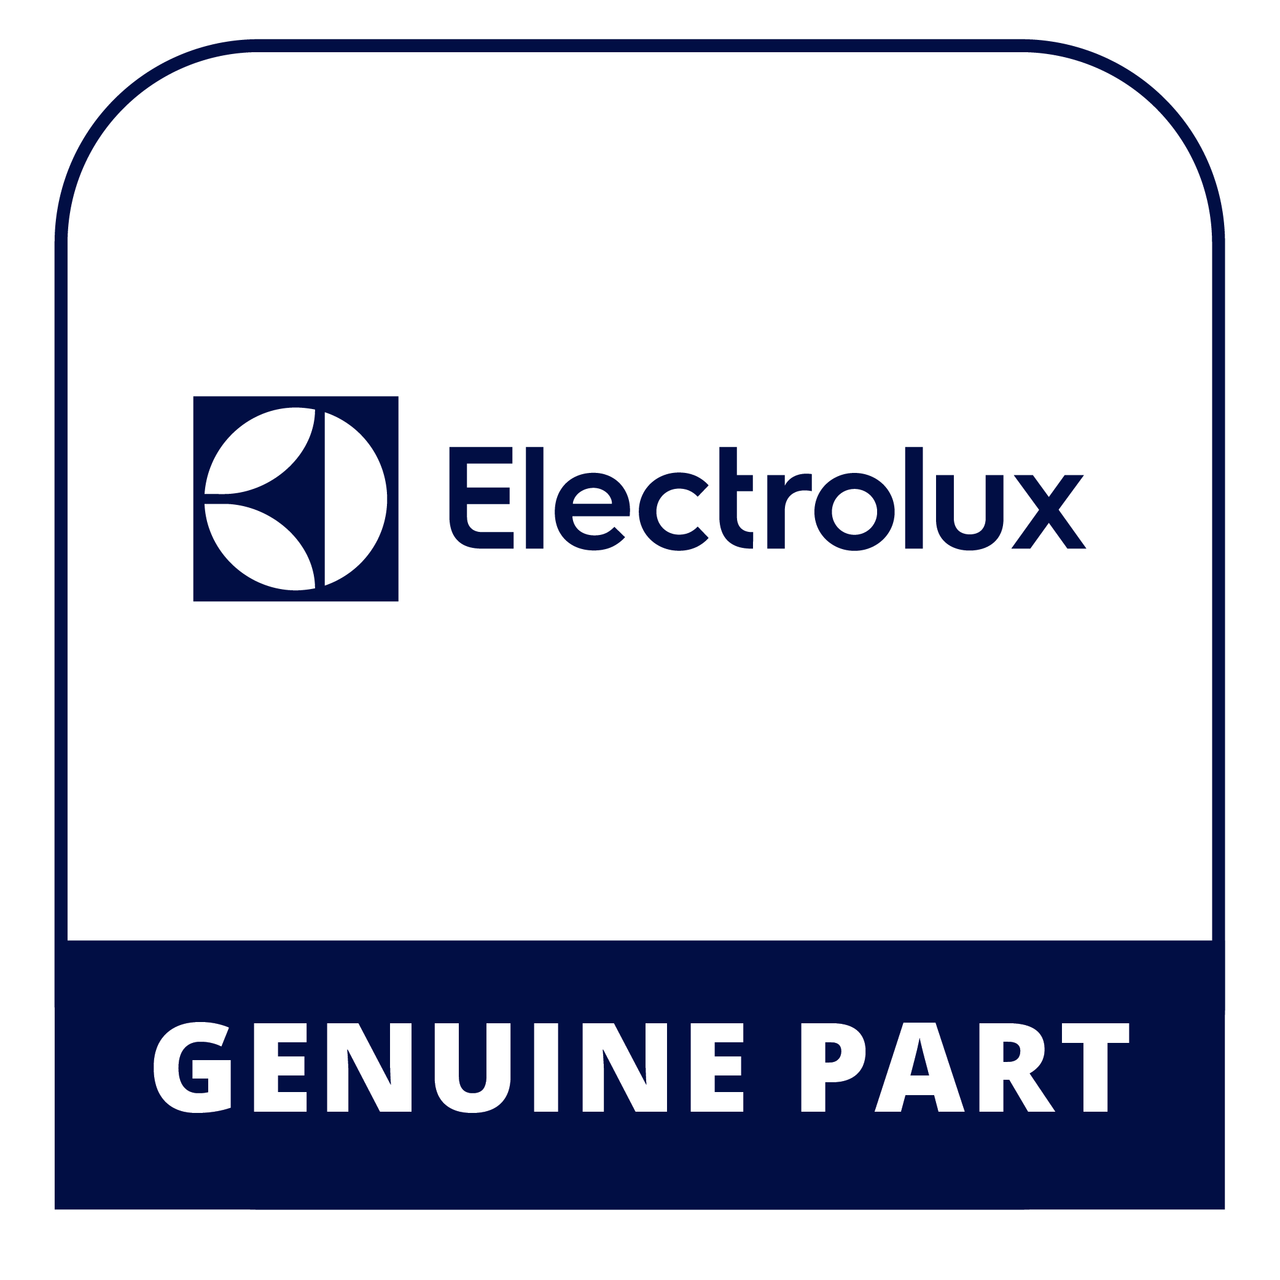 Frigidaire - Electrolux 5304500436 Bracket - Genuine Electrolux Part